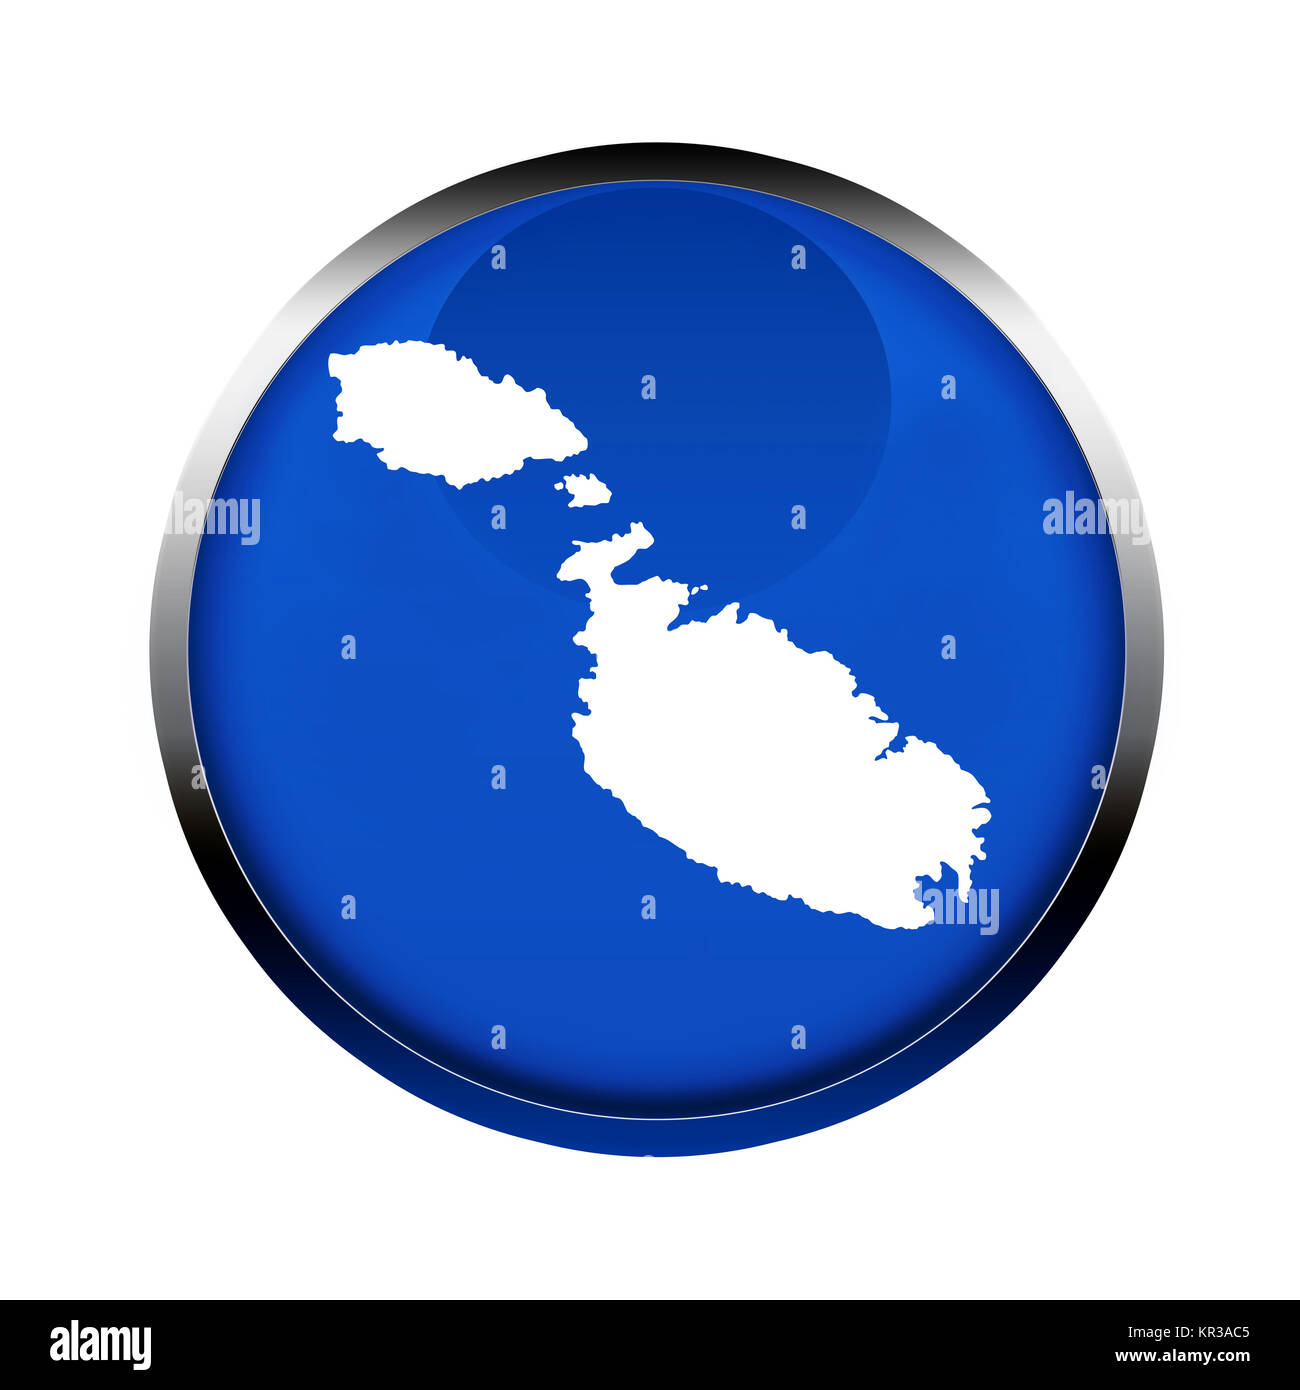 Malta map button Stock Photo